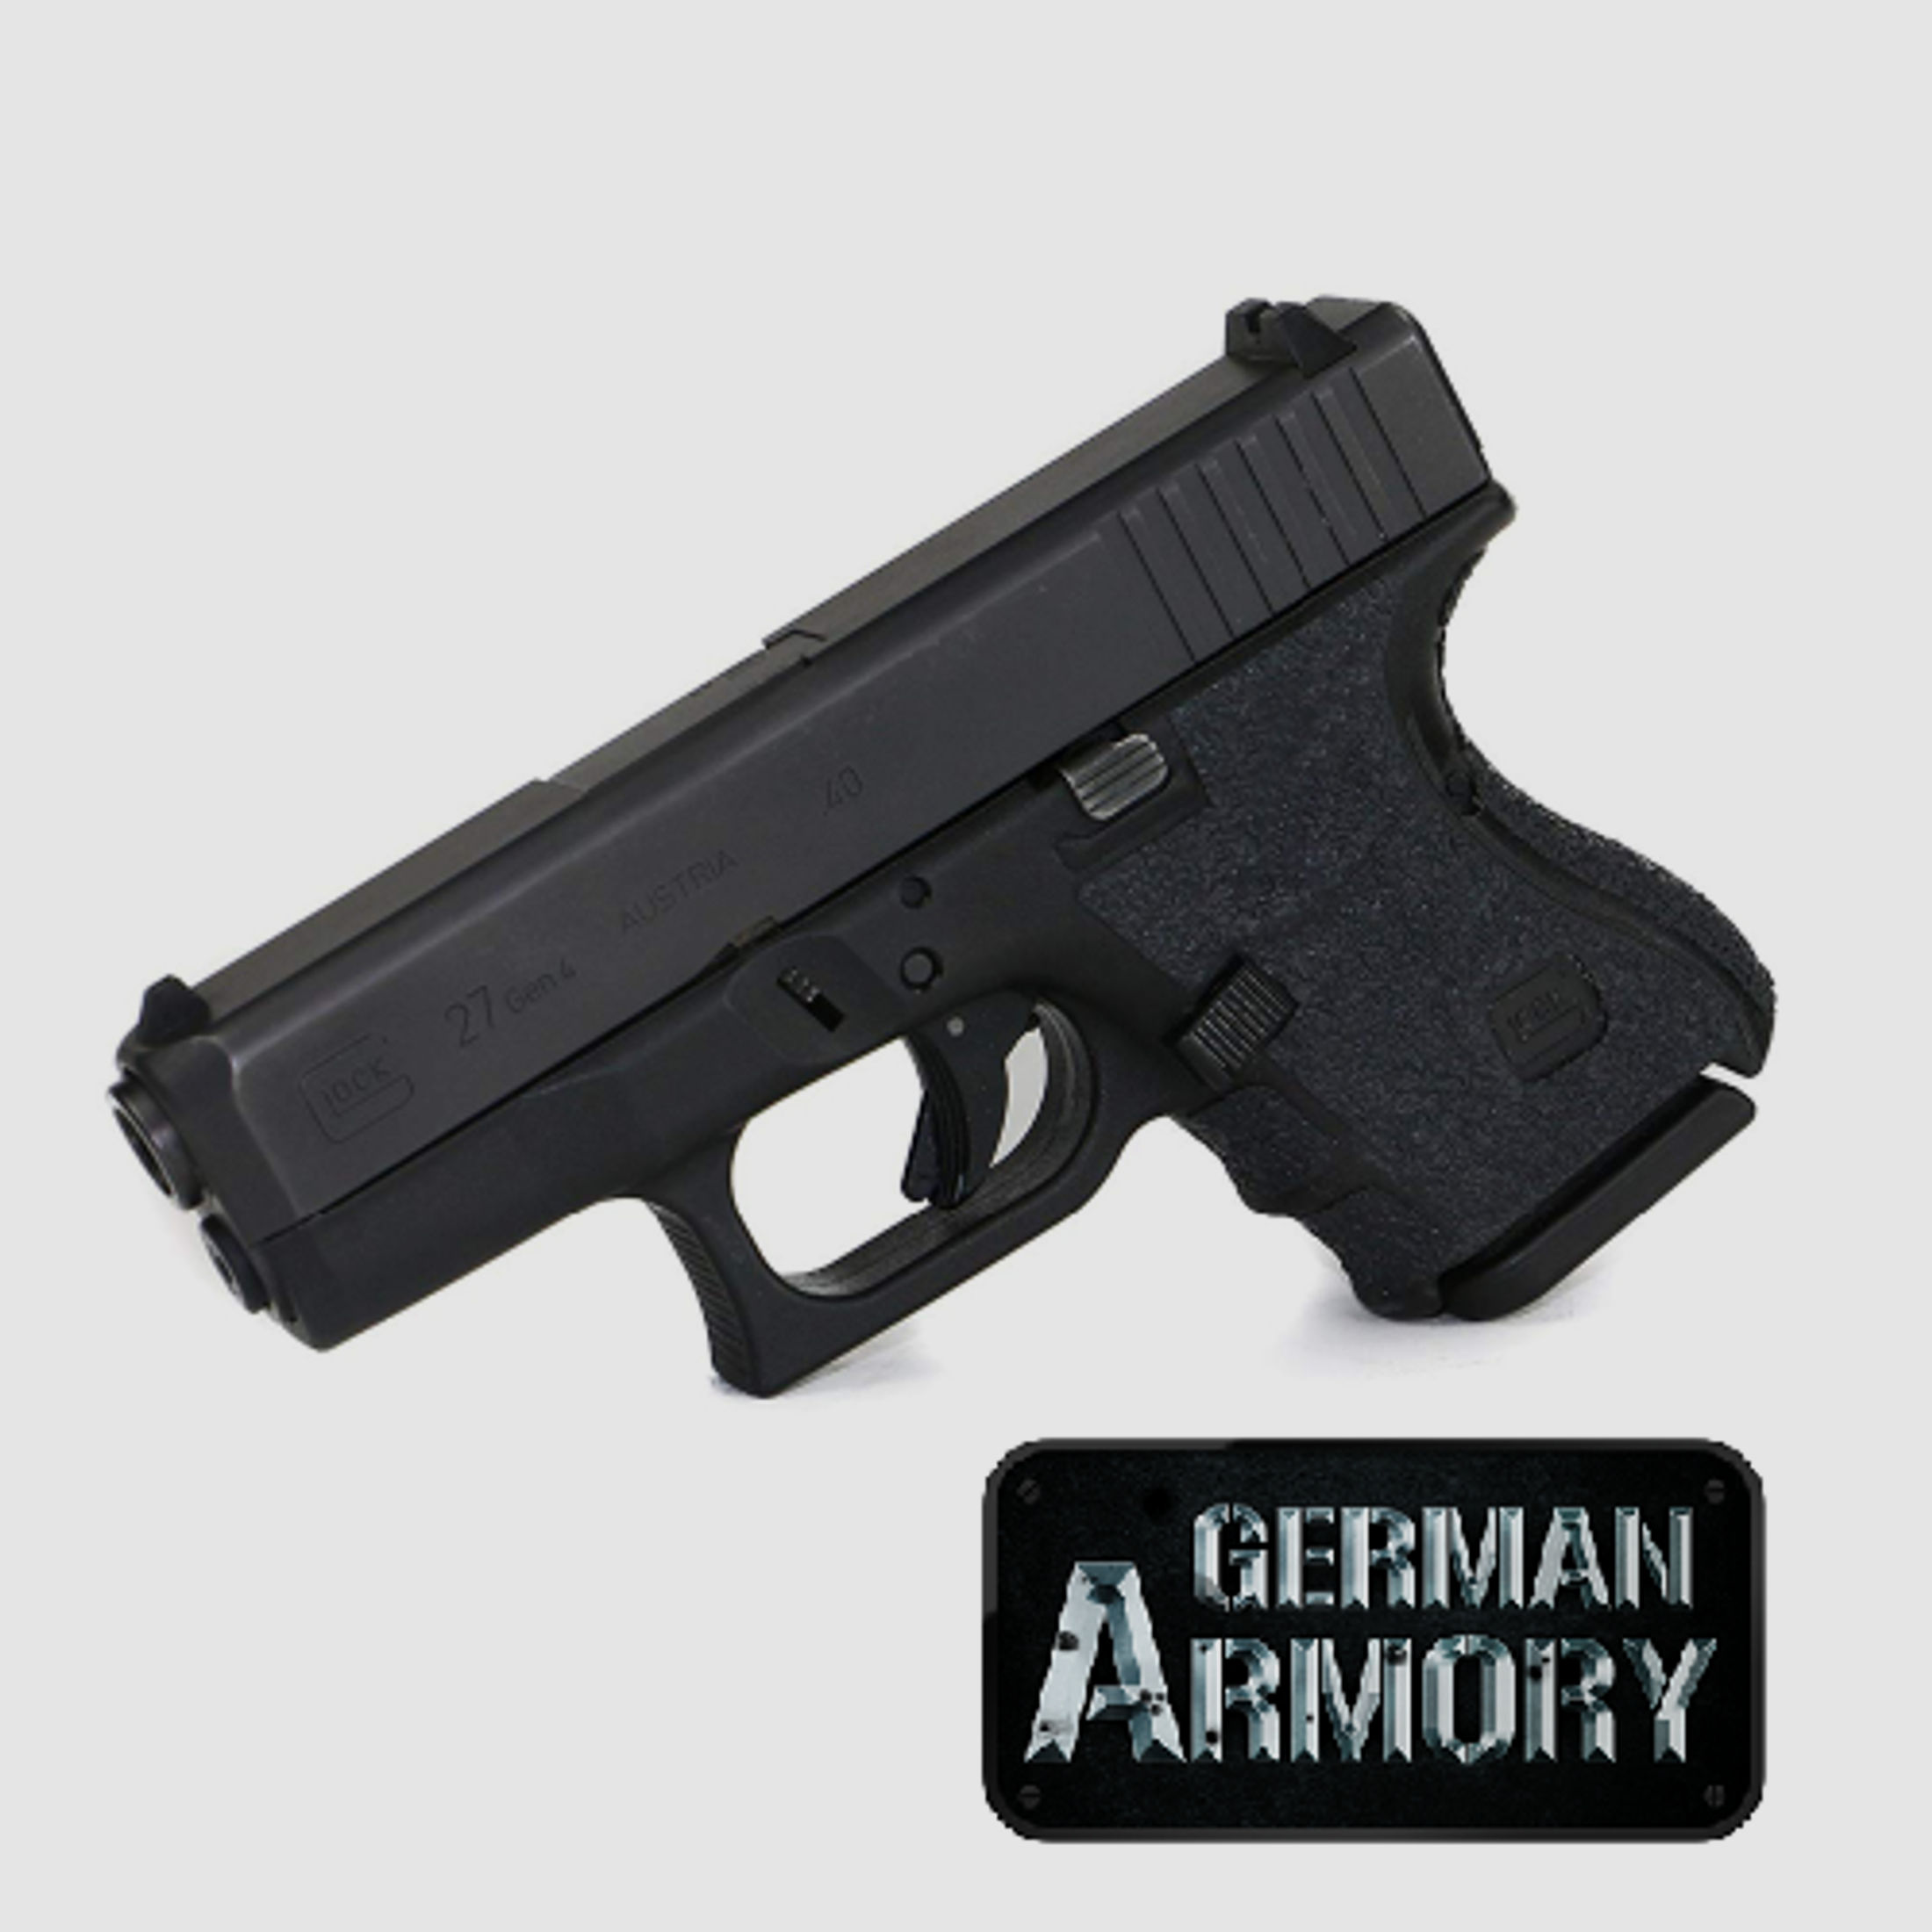 Gummi Gripaufkleber für Glock 26 27 33 besserer Grip sicheres Handling IPSC Combatshooting